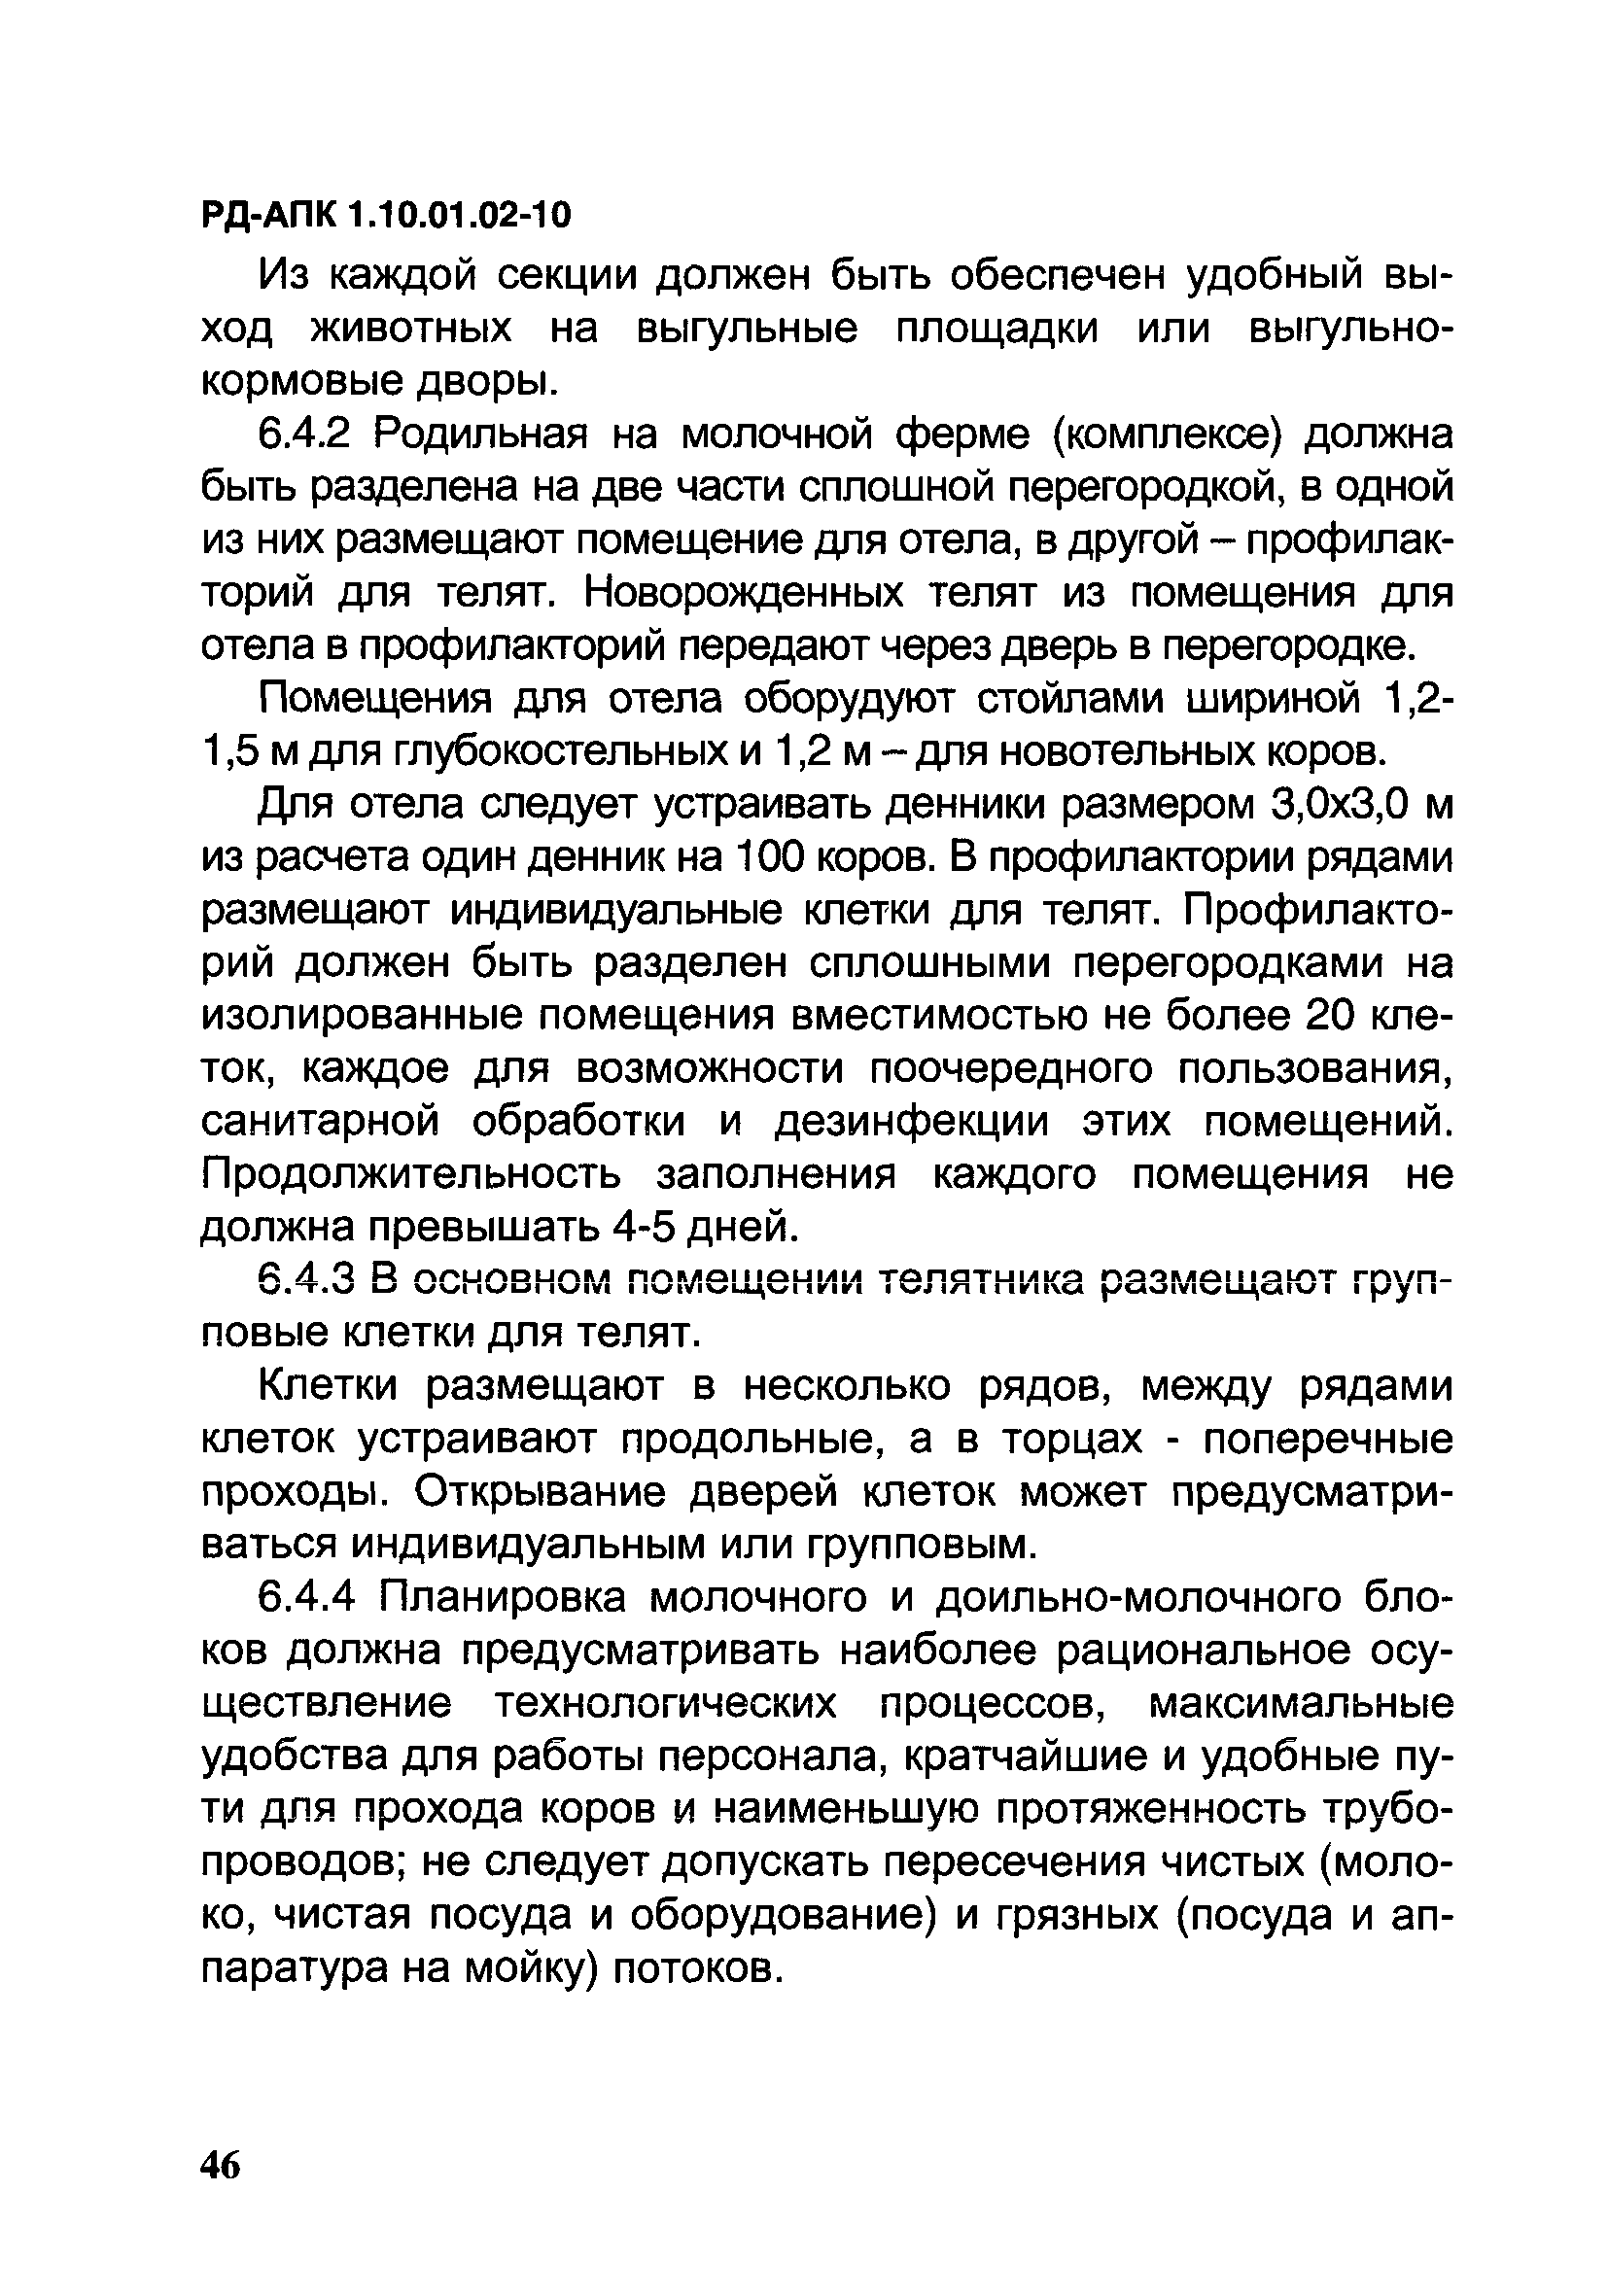 РД-АПК 1.10.01.02-10